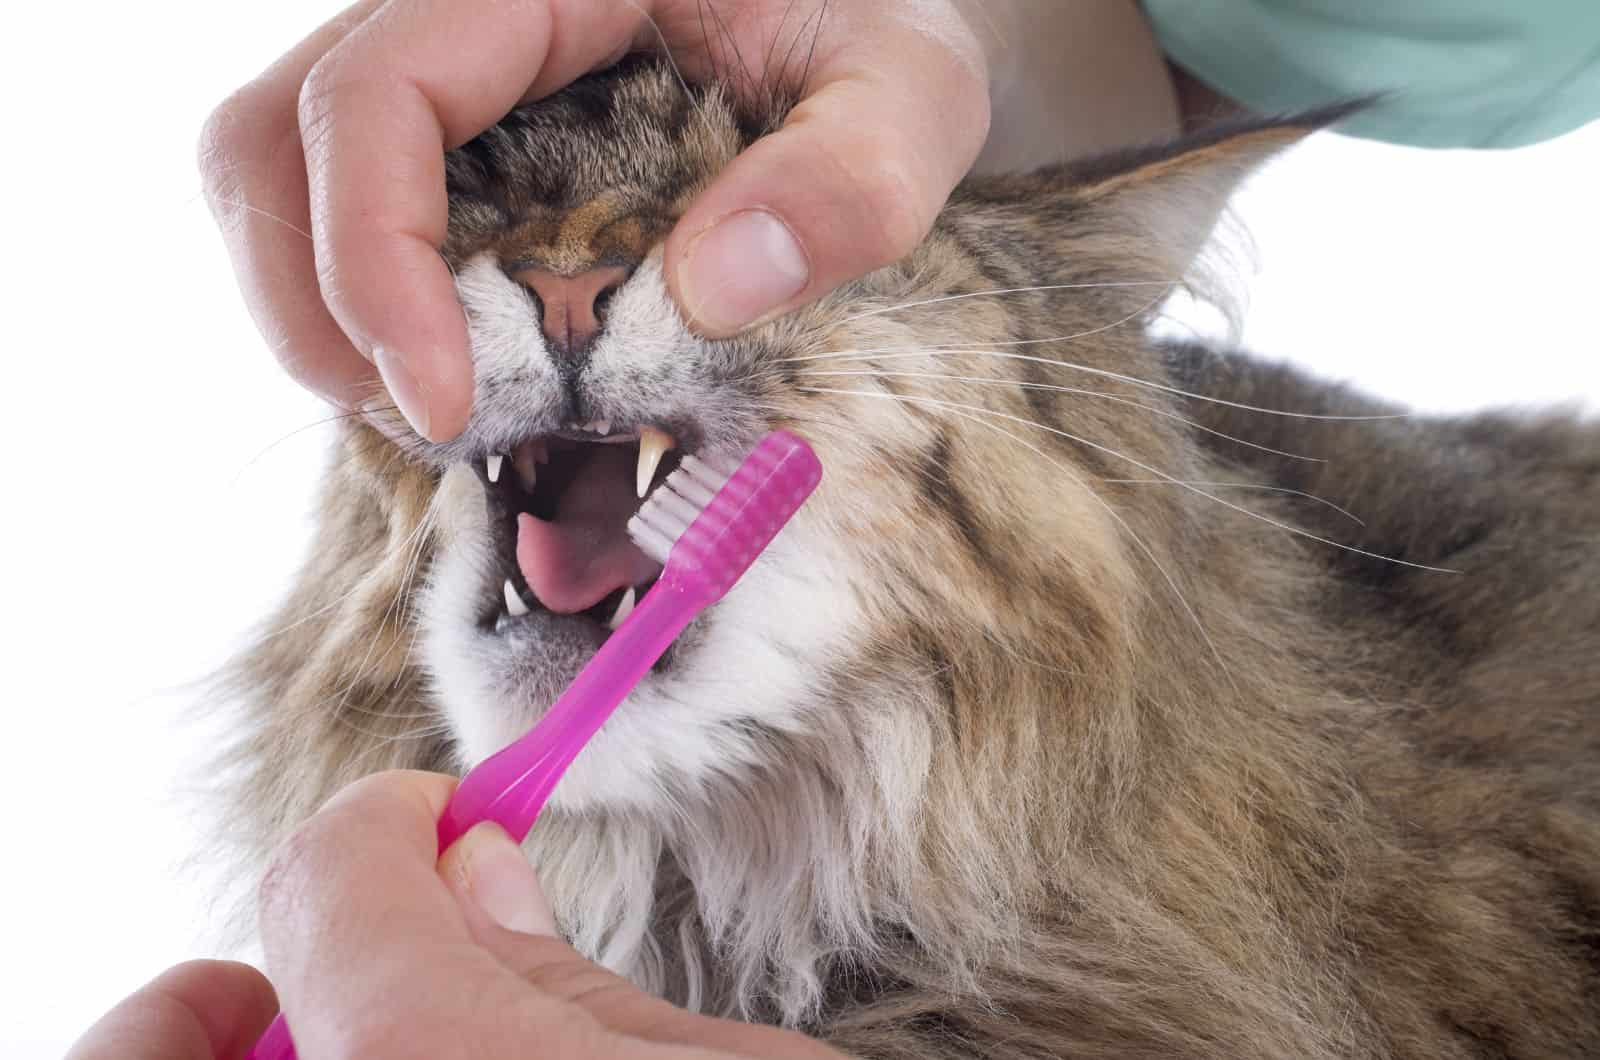 brushing cat's teeth